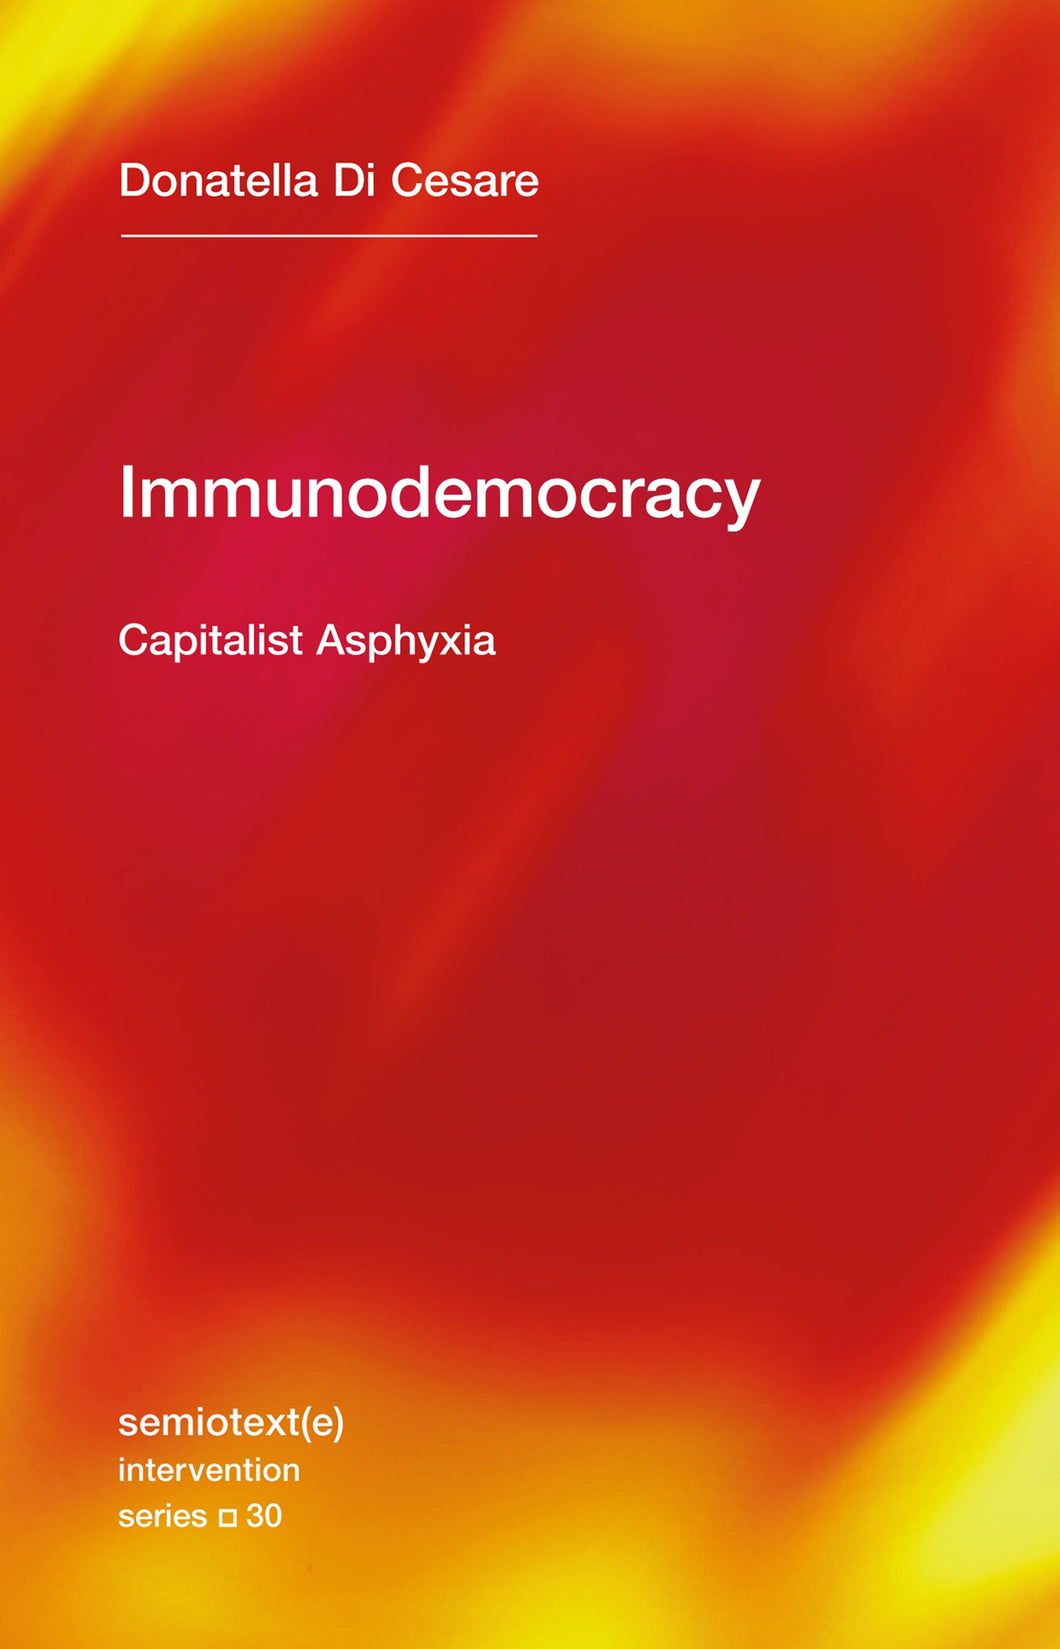 Immunodemocracy : Capitalist Asphyxia ร้านหนังสือและสิ่งของ เป็นร้านหนังสือภาษาอังกฤษหายาก และร้านกาแฟ หรือ บุ๊คคาเฟ่ ตั้งอยู่สุขุมวิท กรุงเทพ